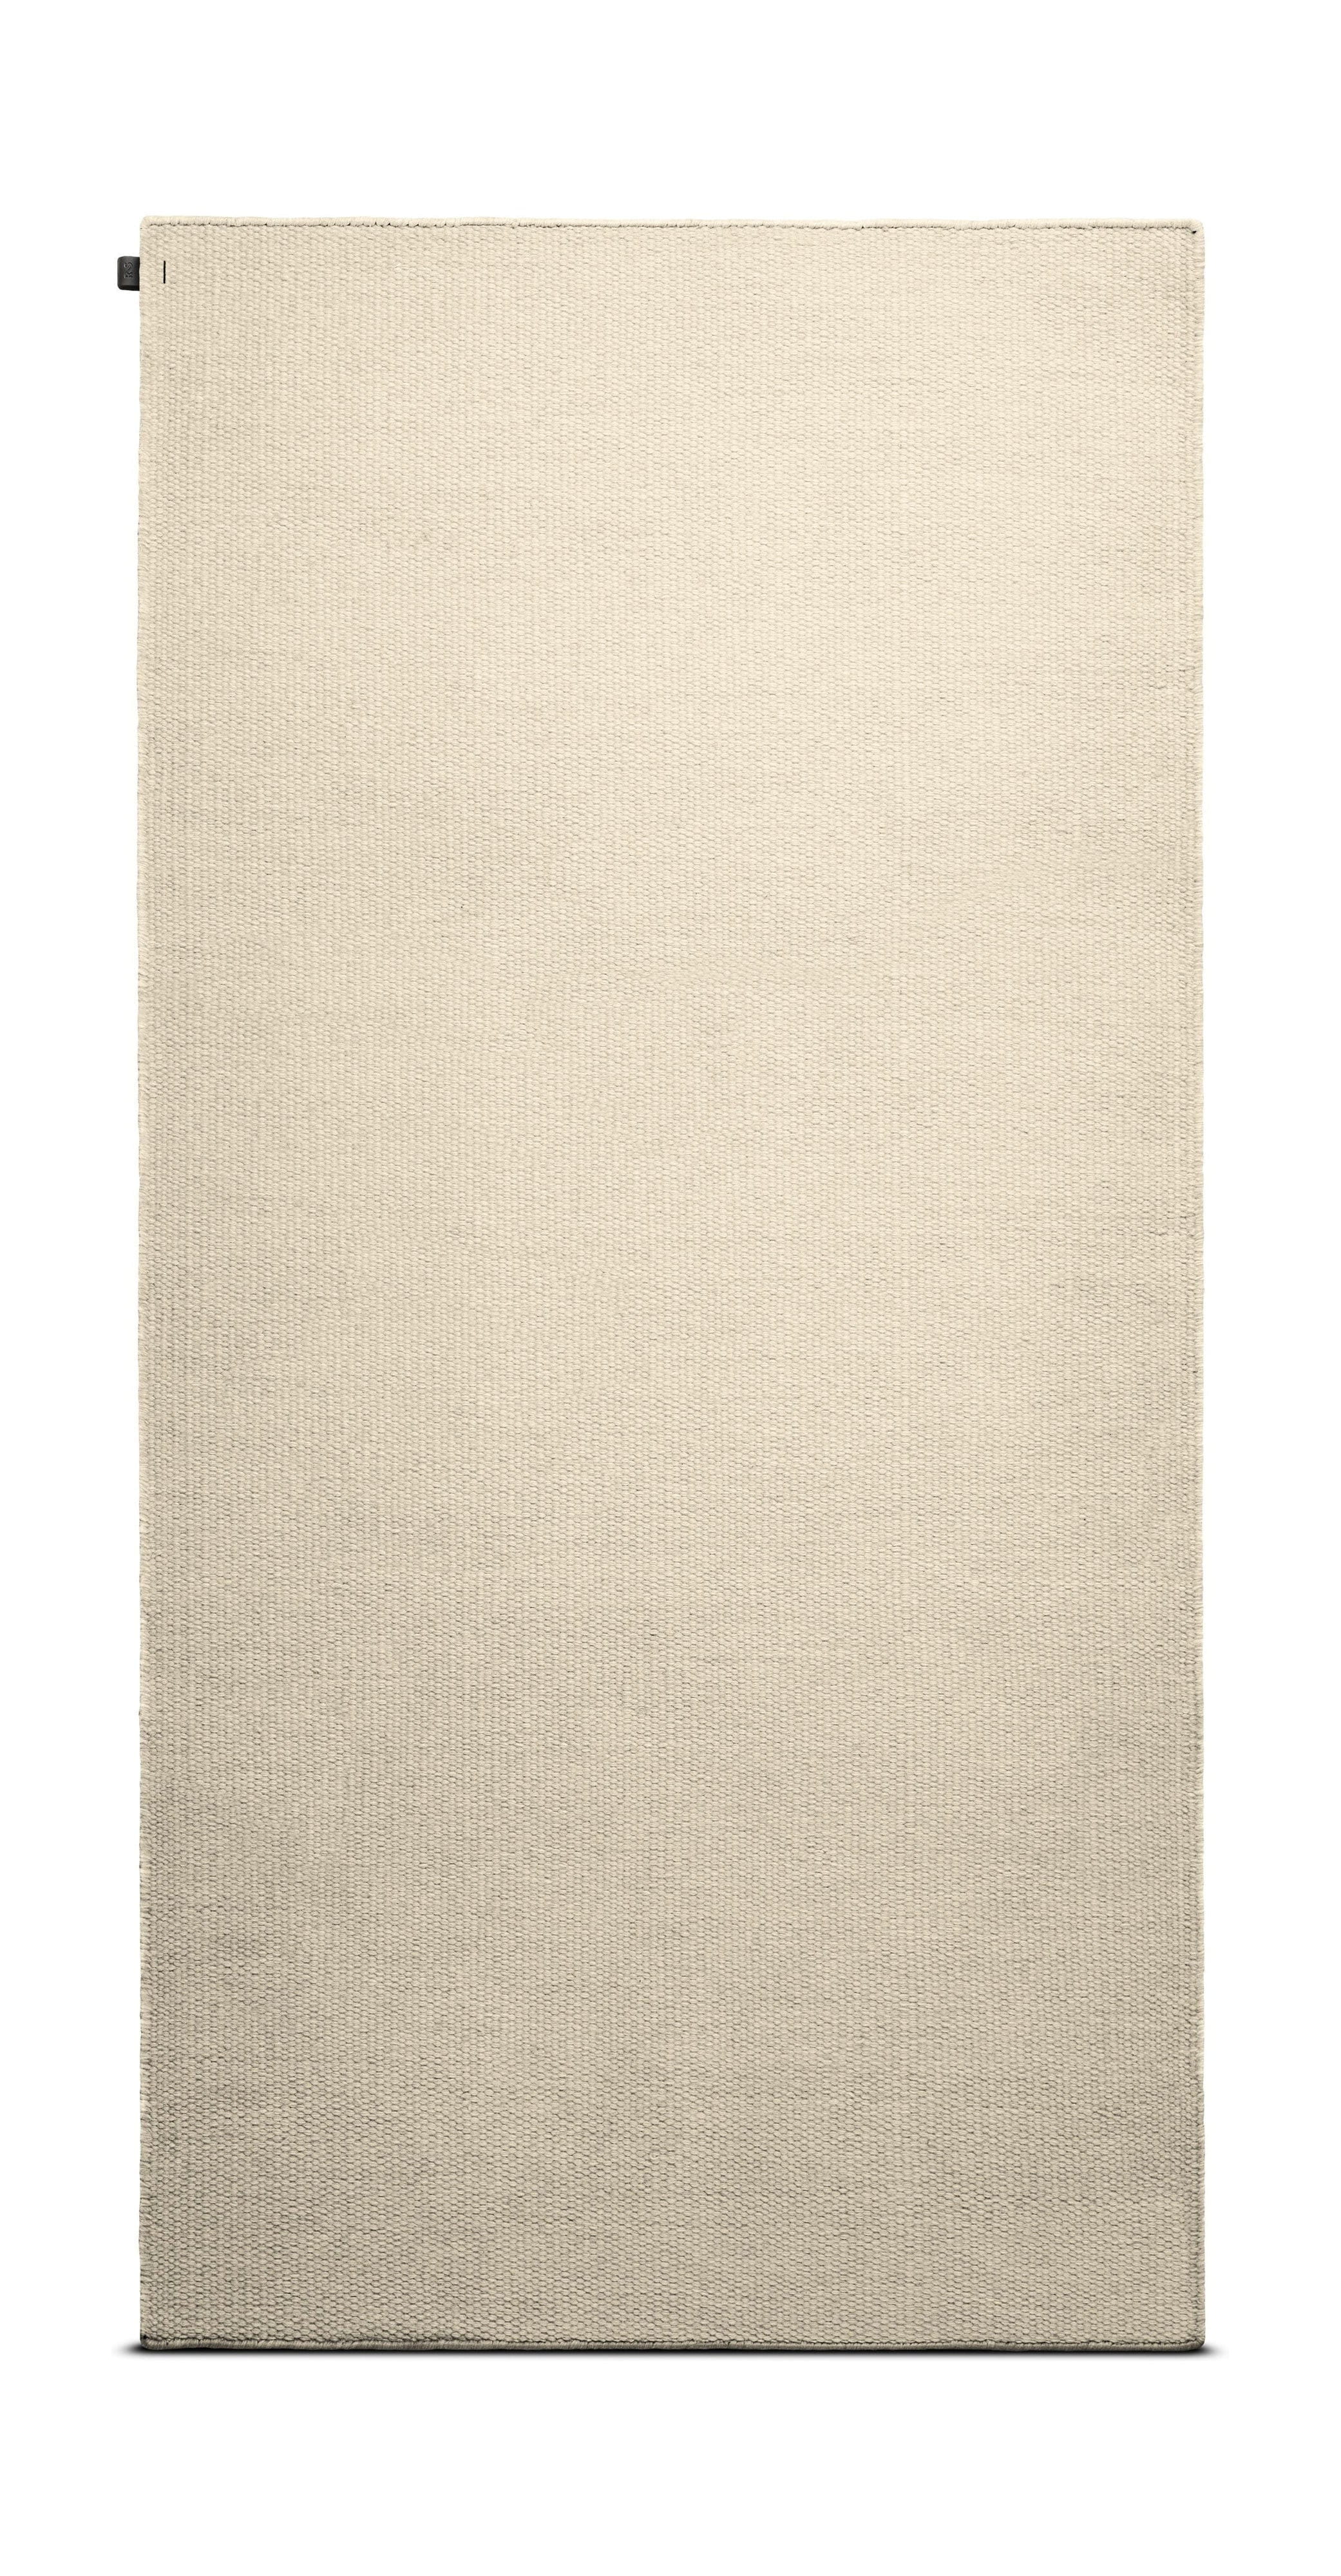 Rug Solid Huisdier tapijt 60 x 90 cm, latte